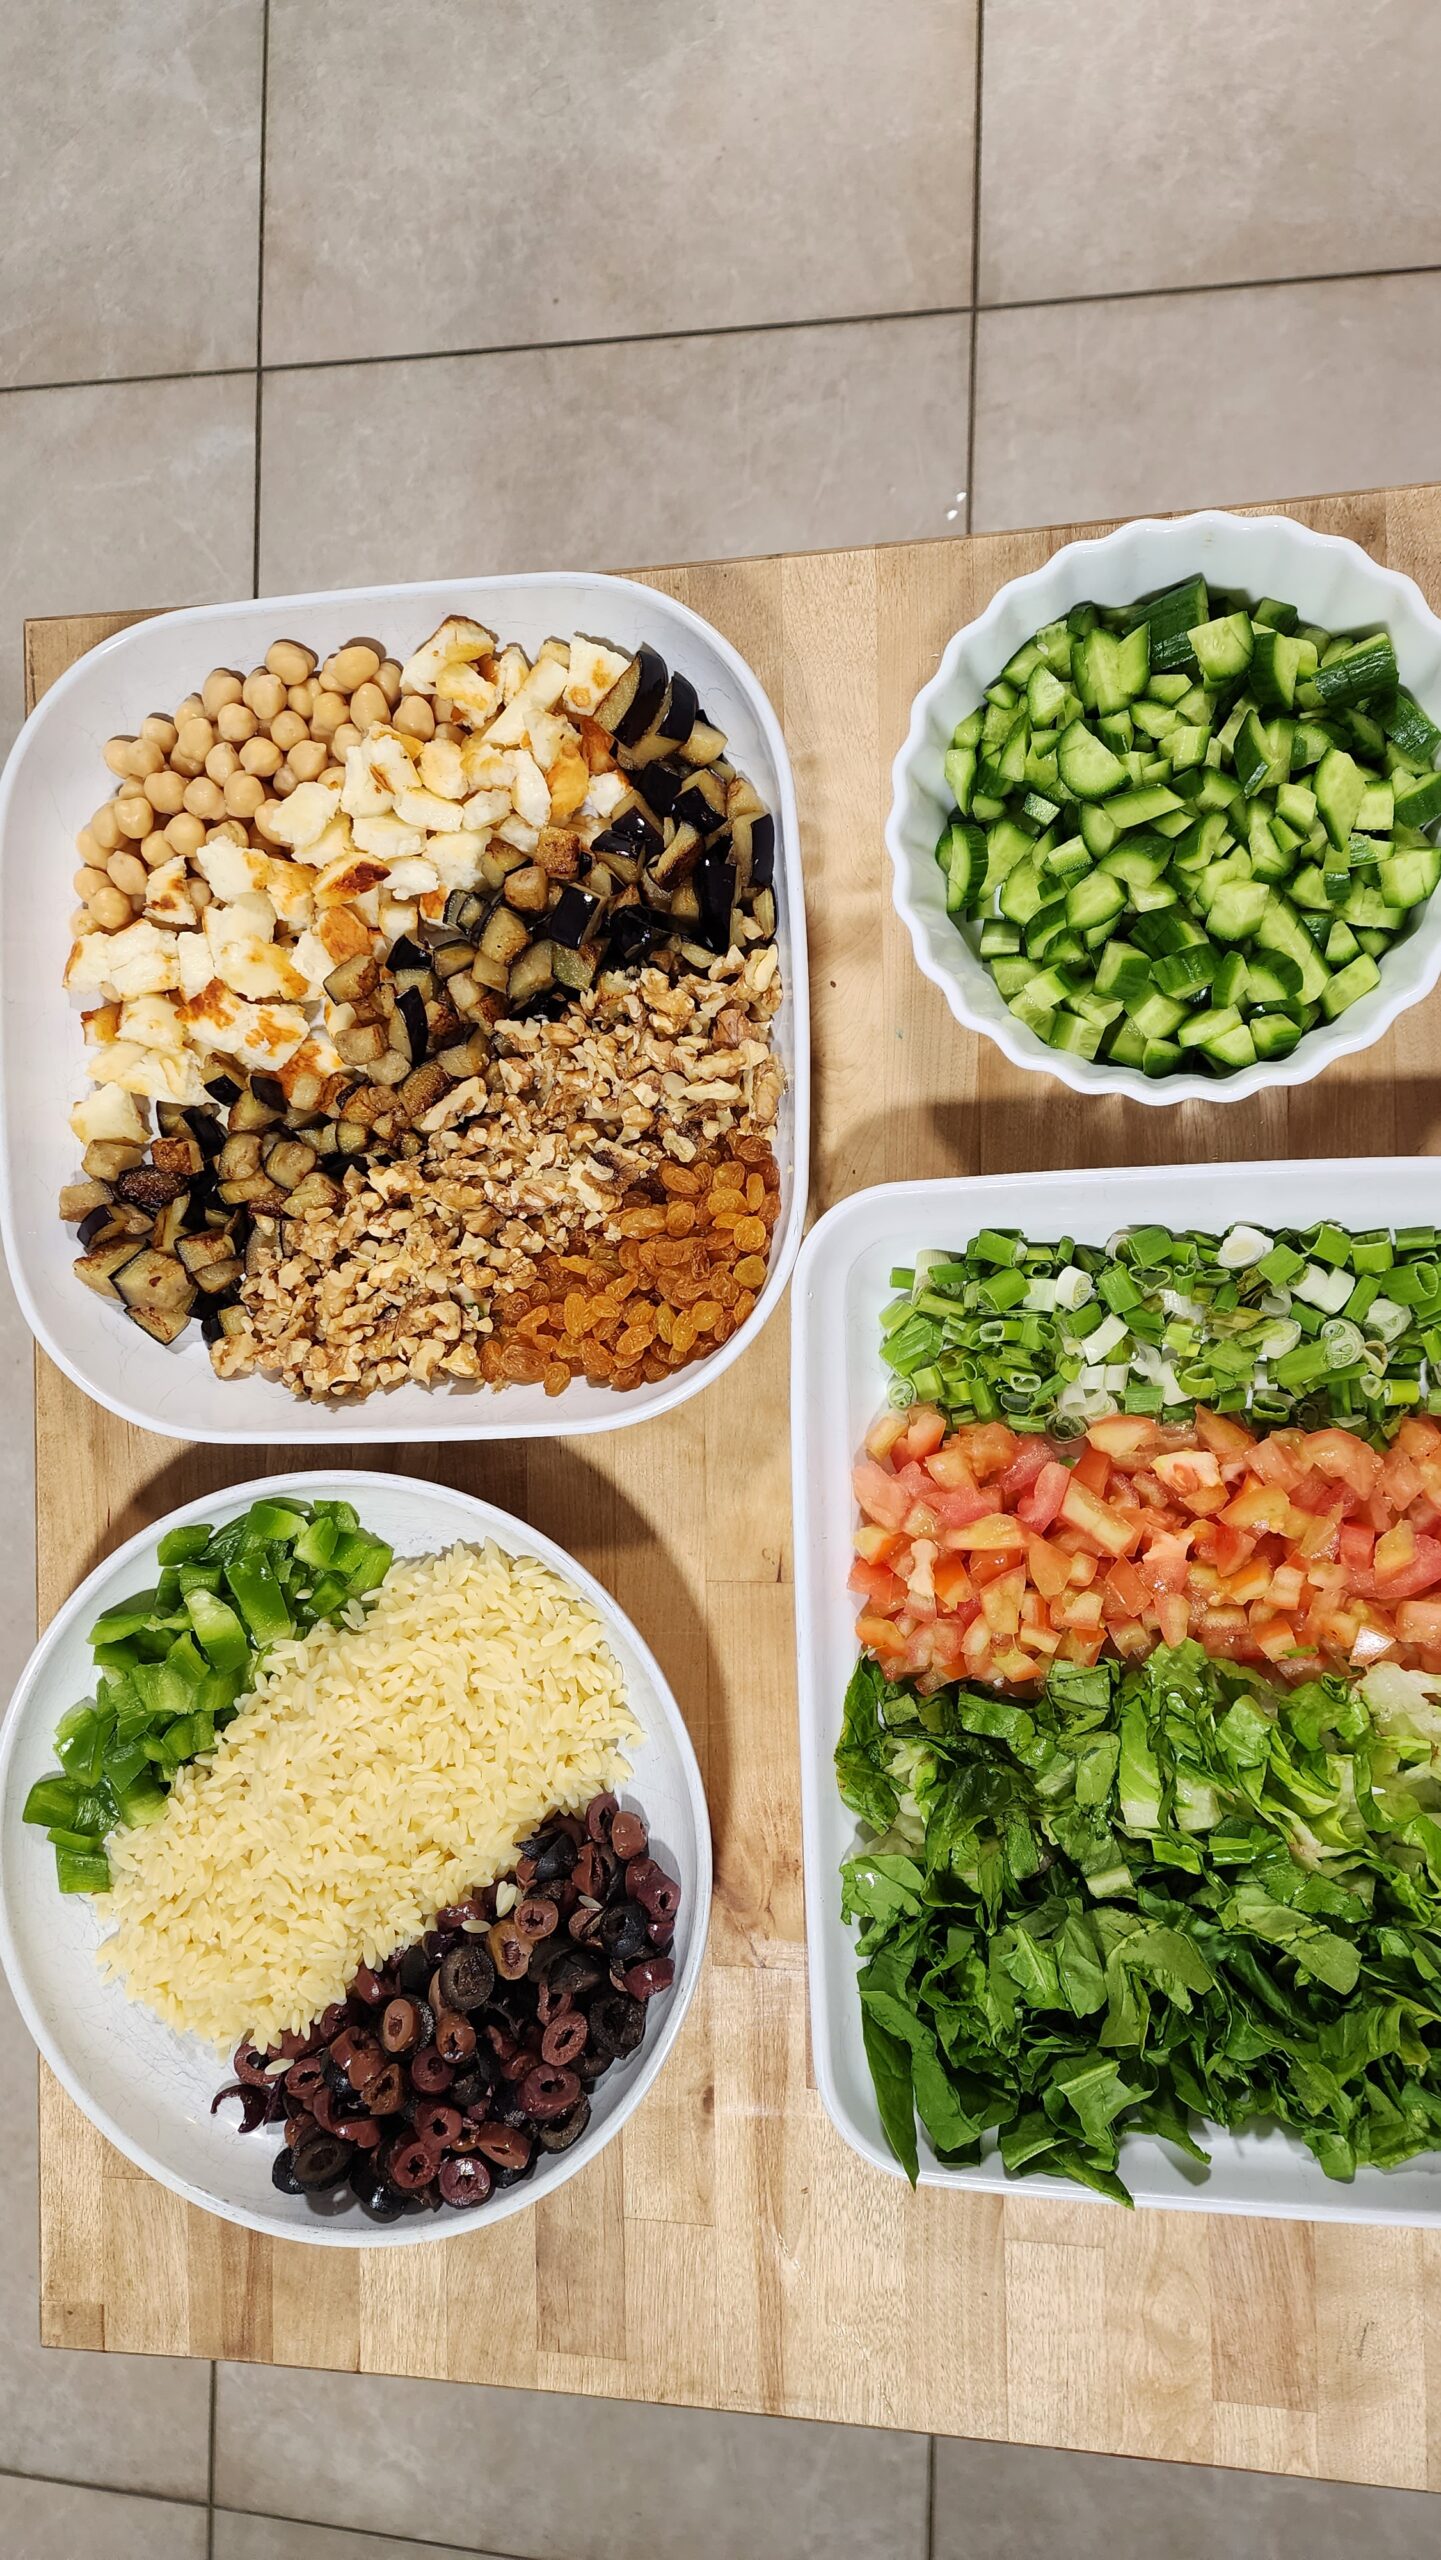 Ingredients for Orzo Salad- fresh vegetables, orzo pasta, chickpeas, halloumi cheese, olives & raisins